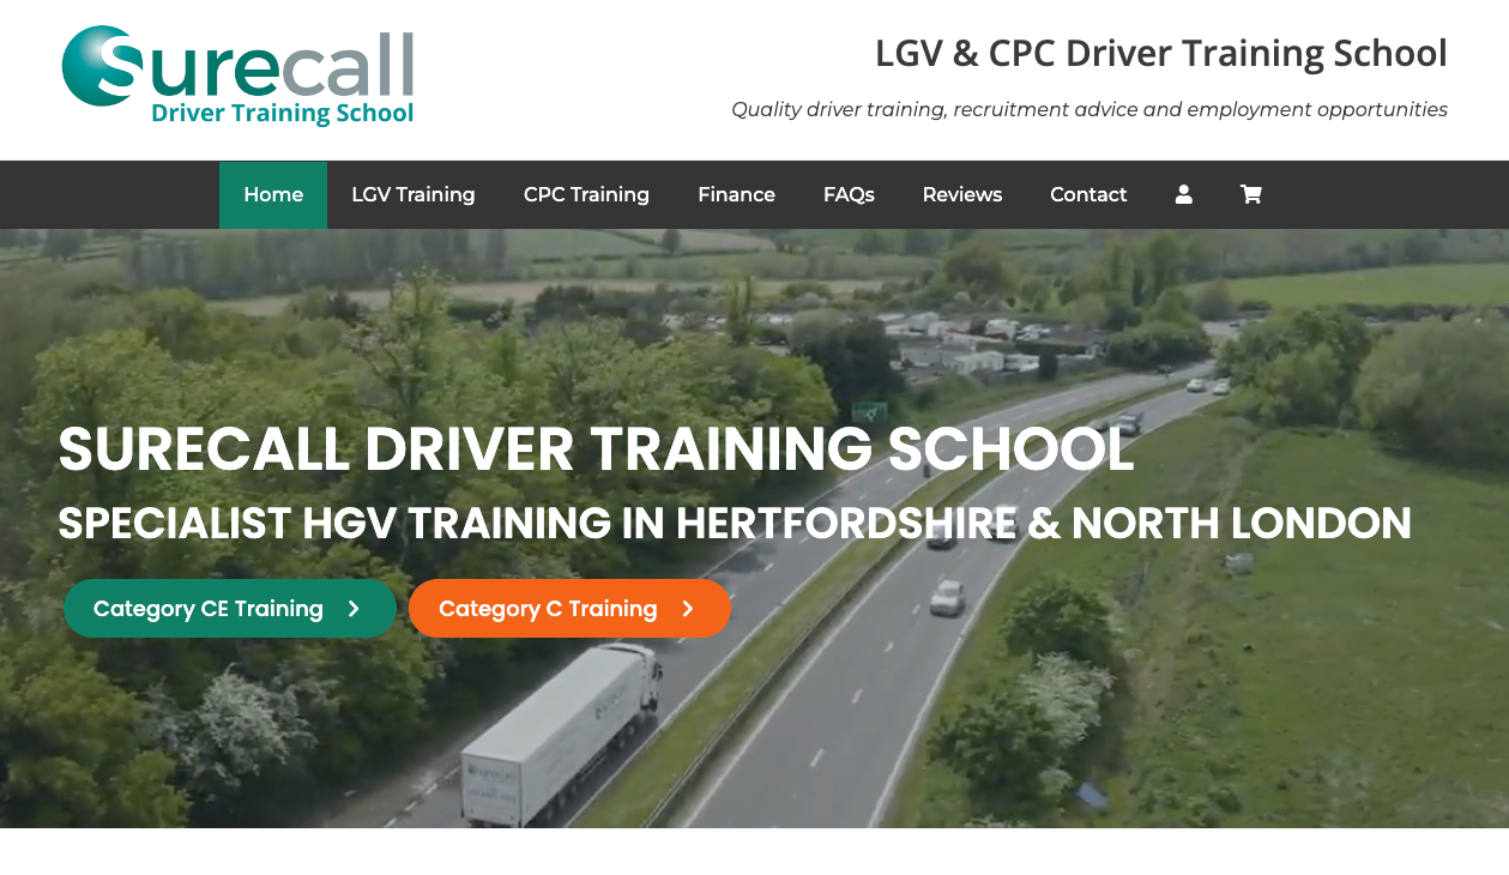 Surecall Driver Training School